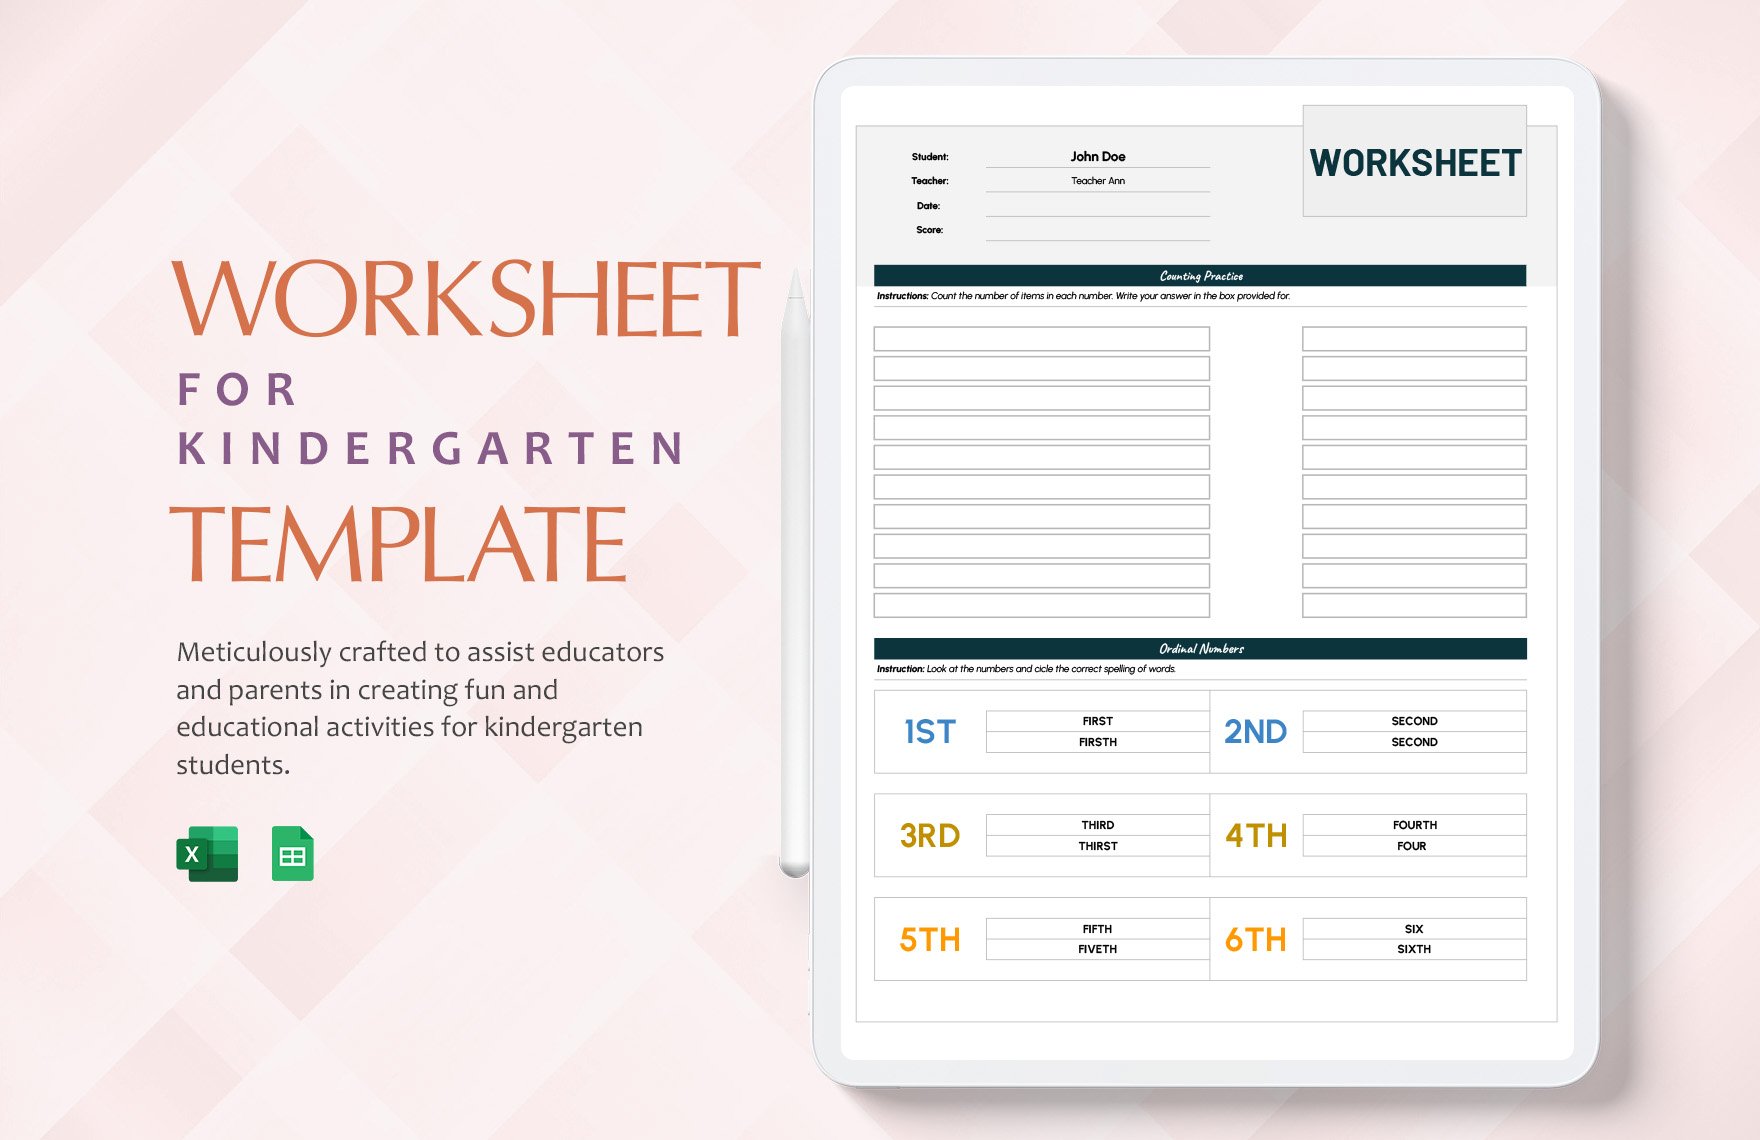 Worksheet For Kindergarten Template in Excel, Google Sheets